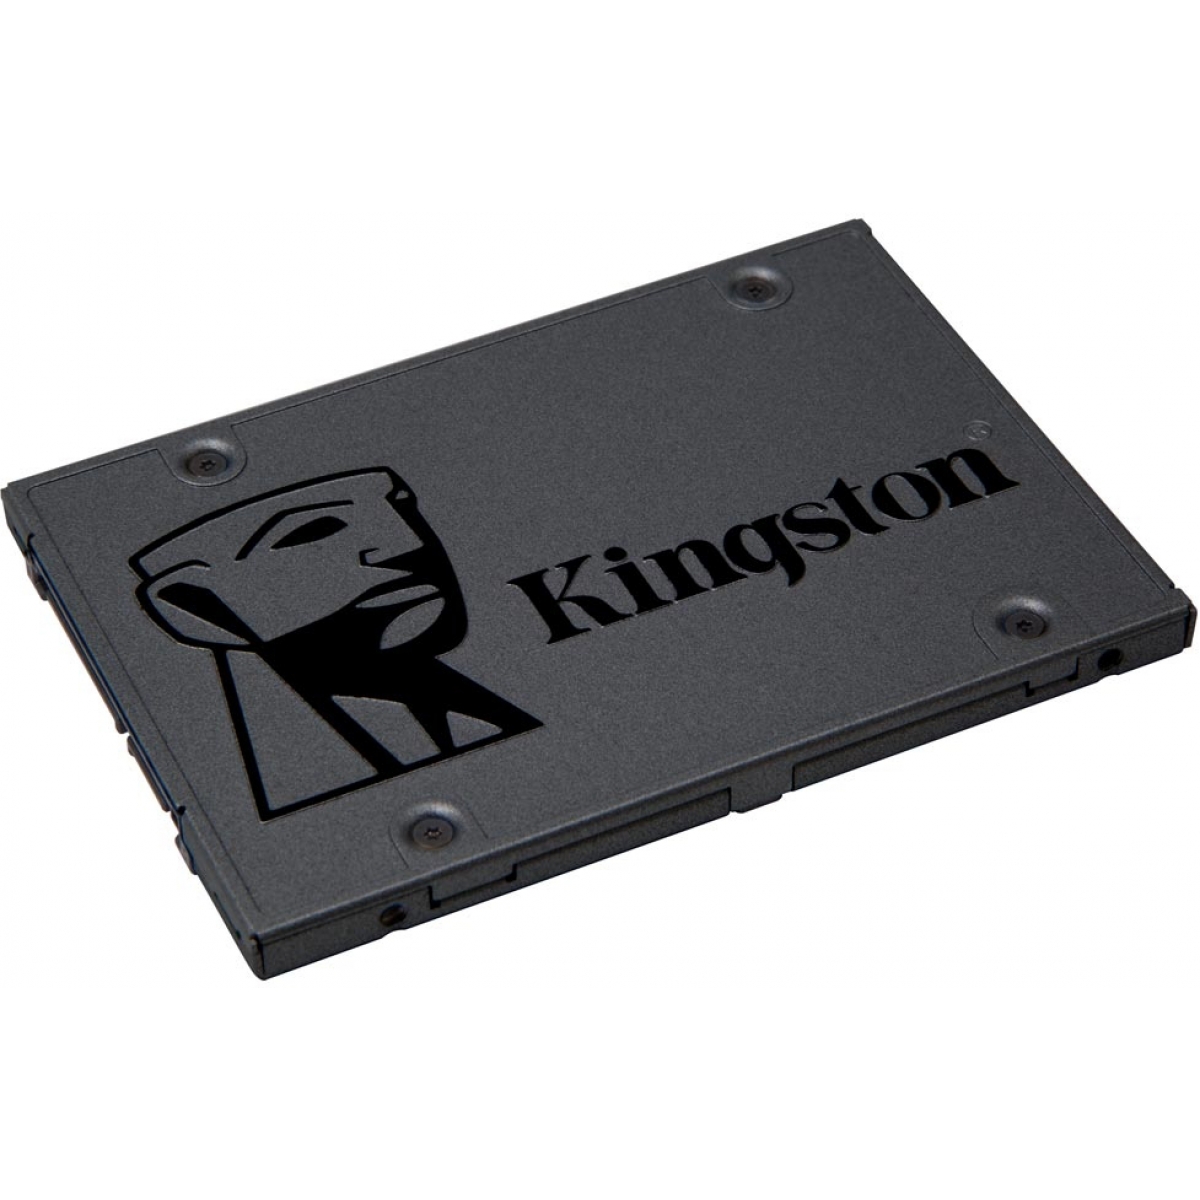 SSD Kingston A400, 240GB, Sata III, Leitura 500MBs Gravação 350MBs, SA400S37/240G